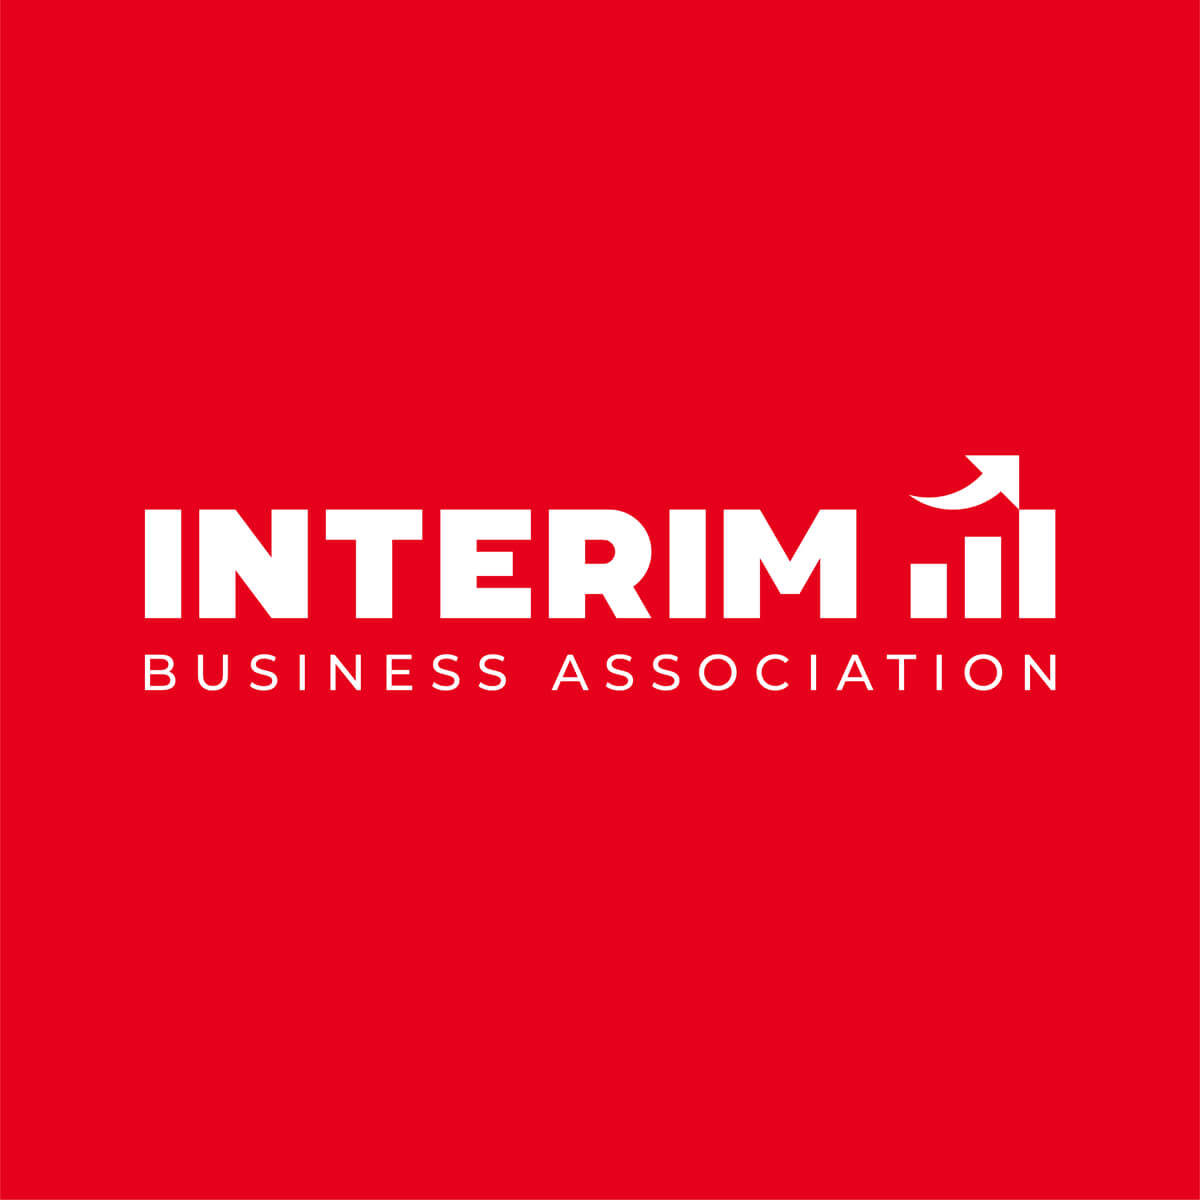 Business association. Interim. Интериму.